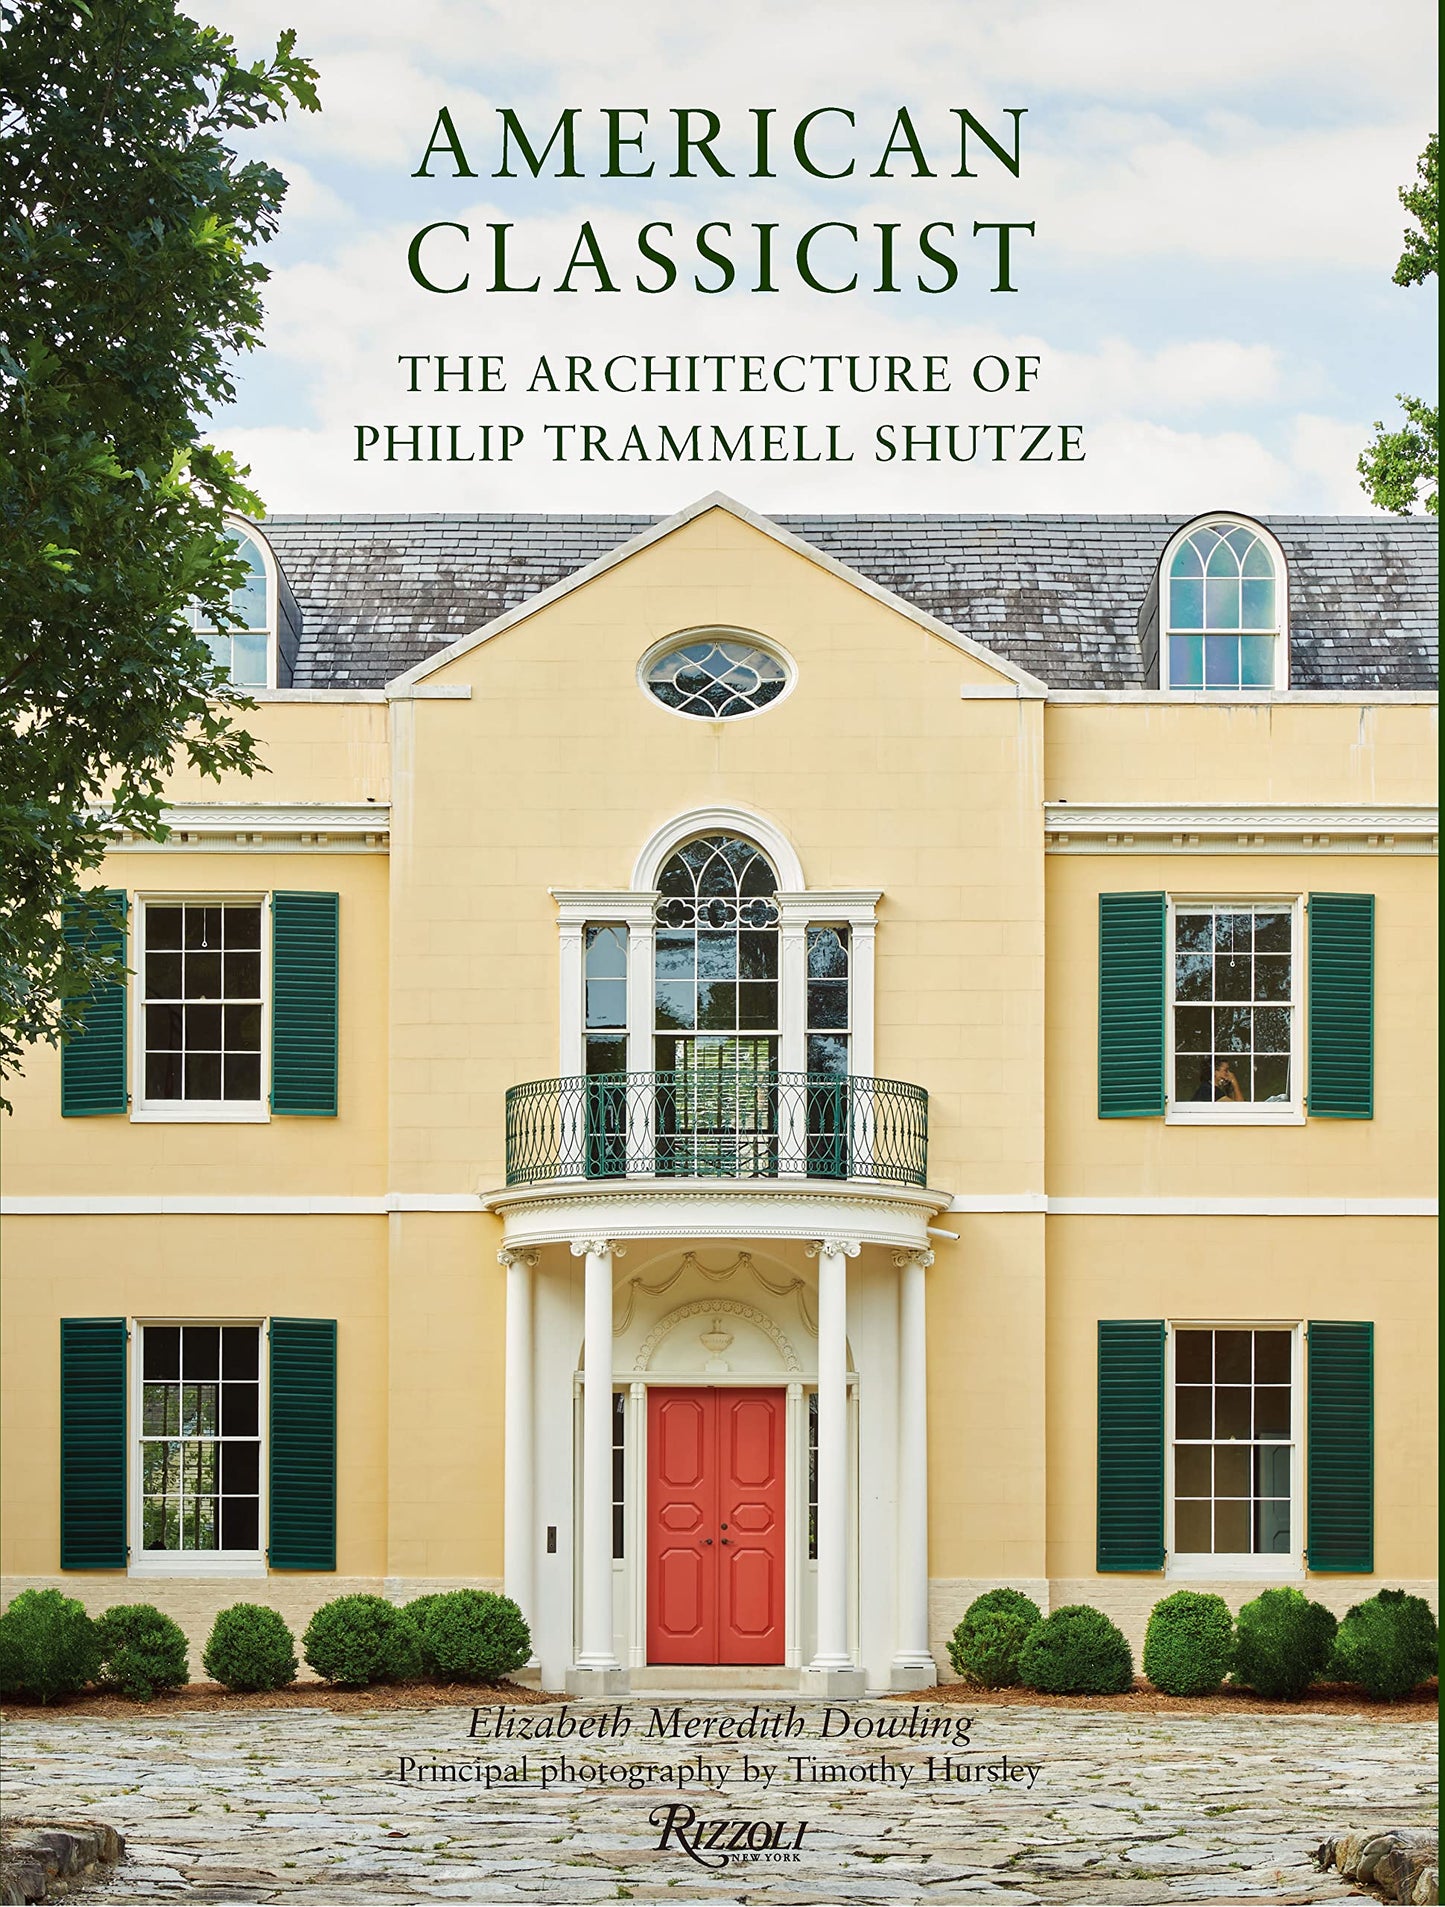 American Classicist: The Architecture of Philip Trammell Shutze